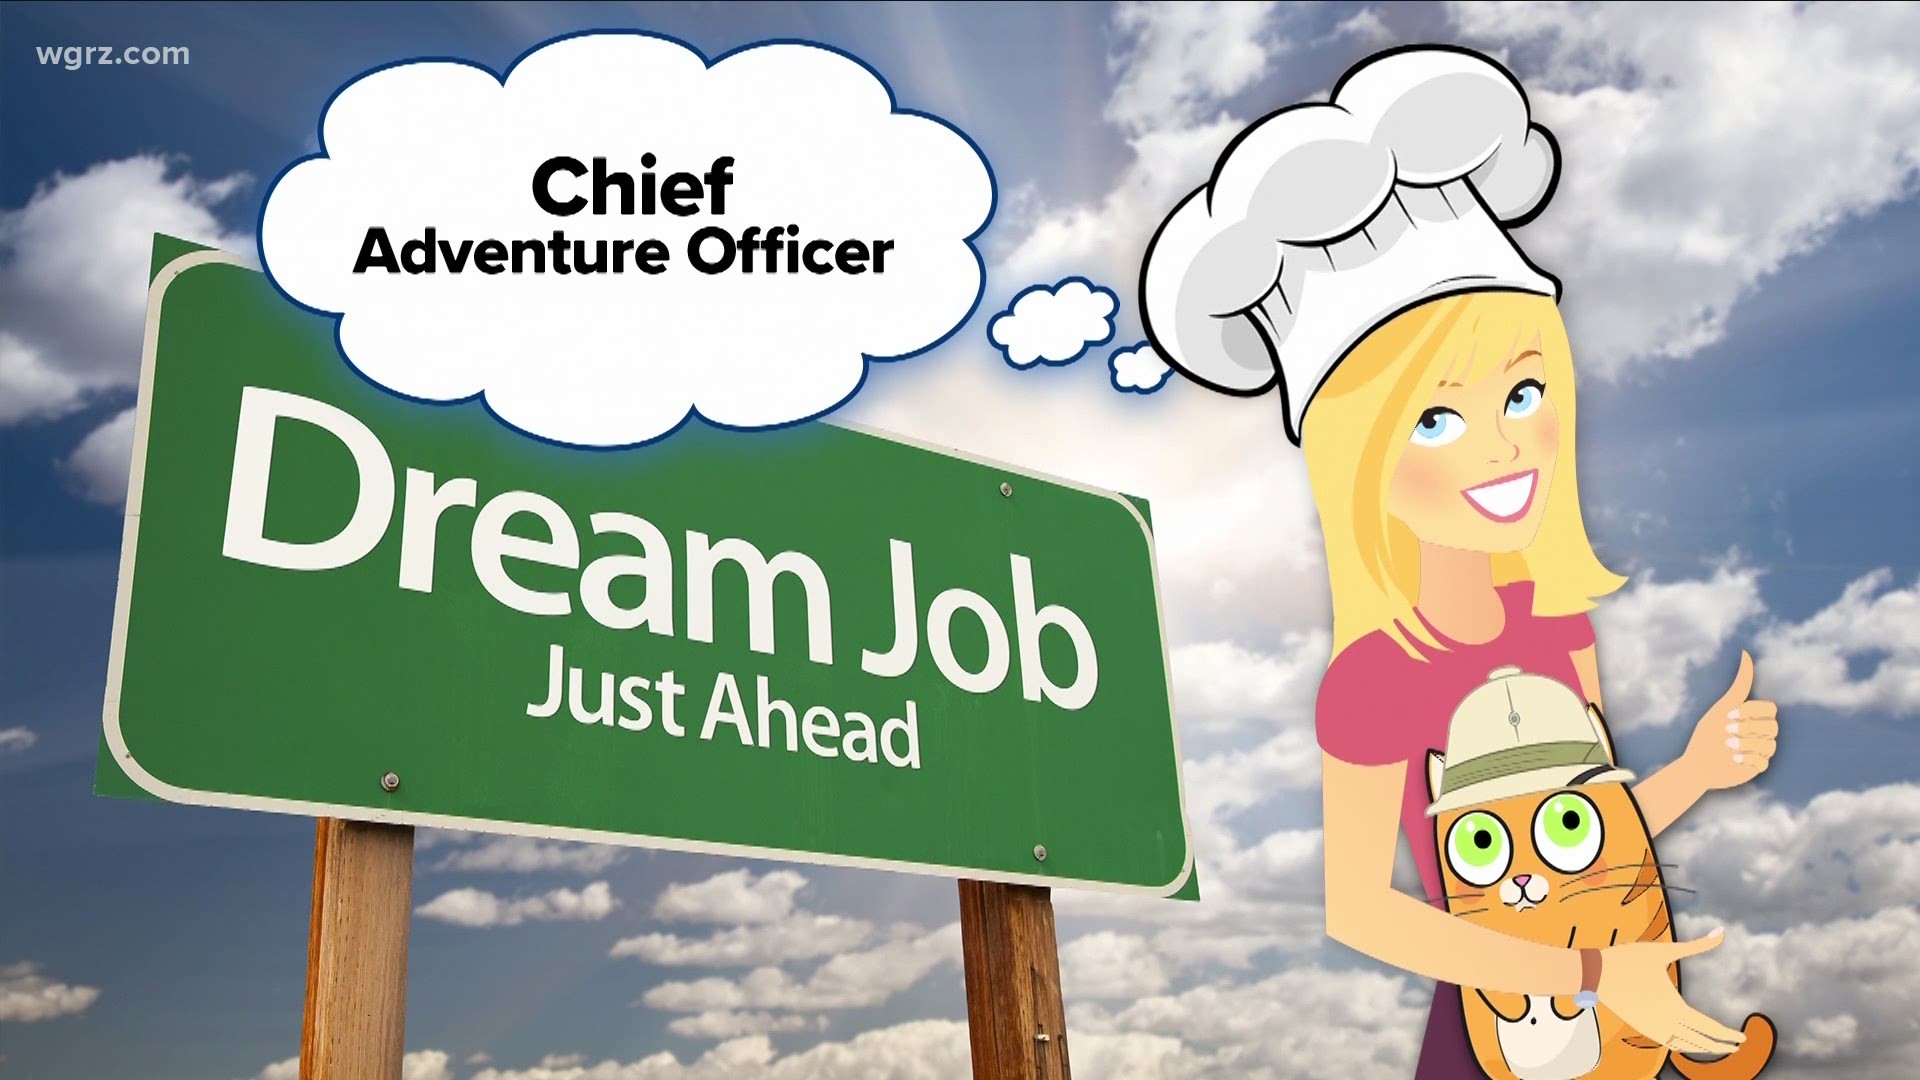 Most Buffalo: 'Dream job, Chief adventure officer'